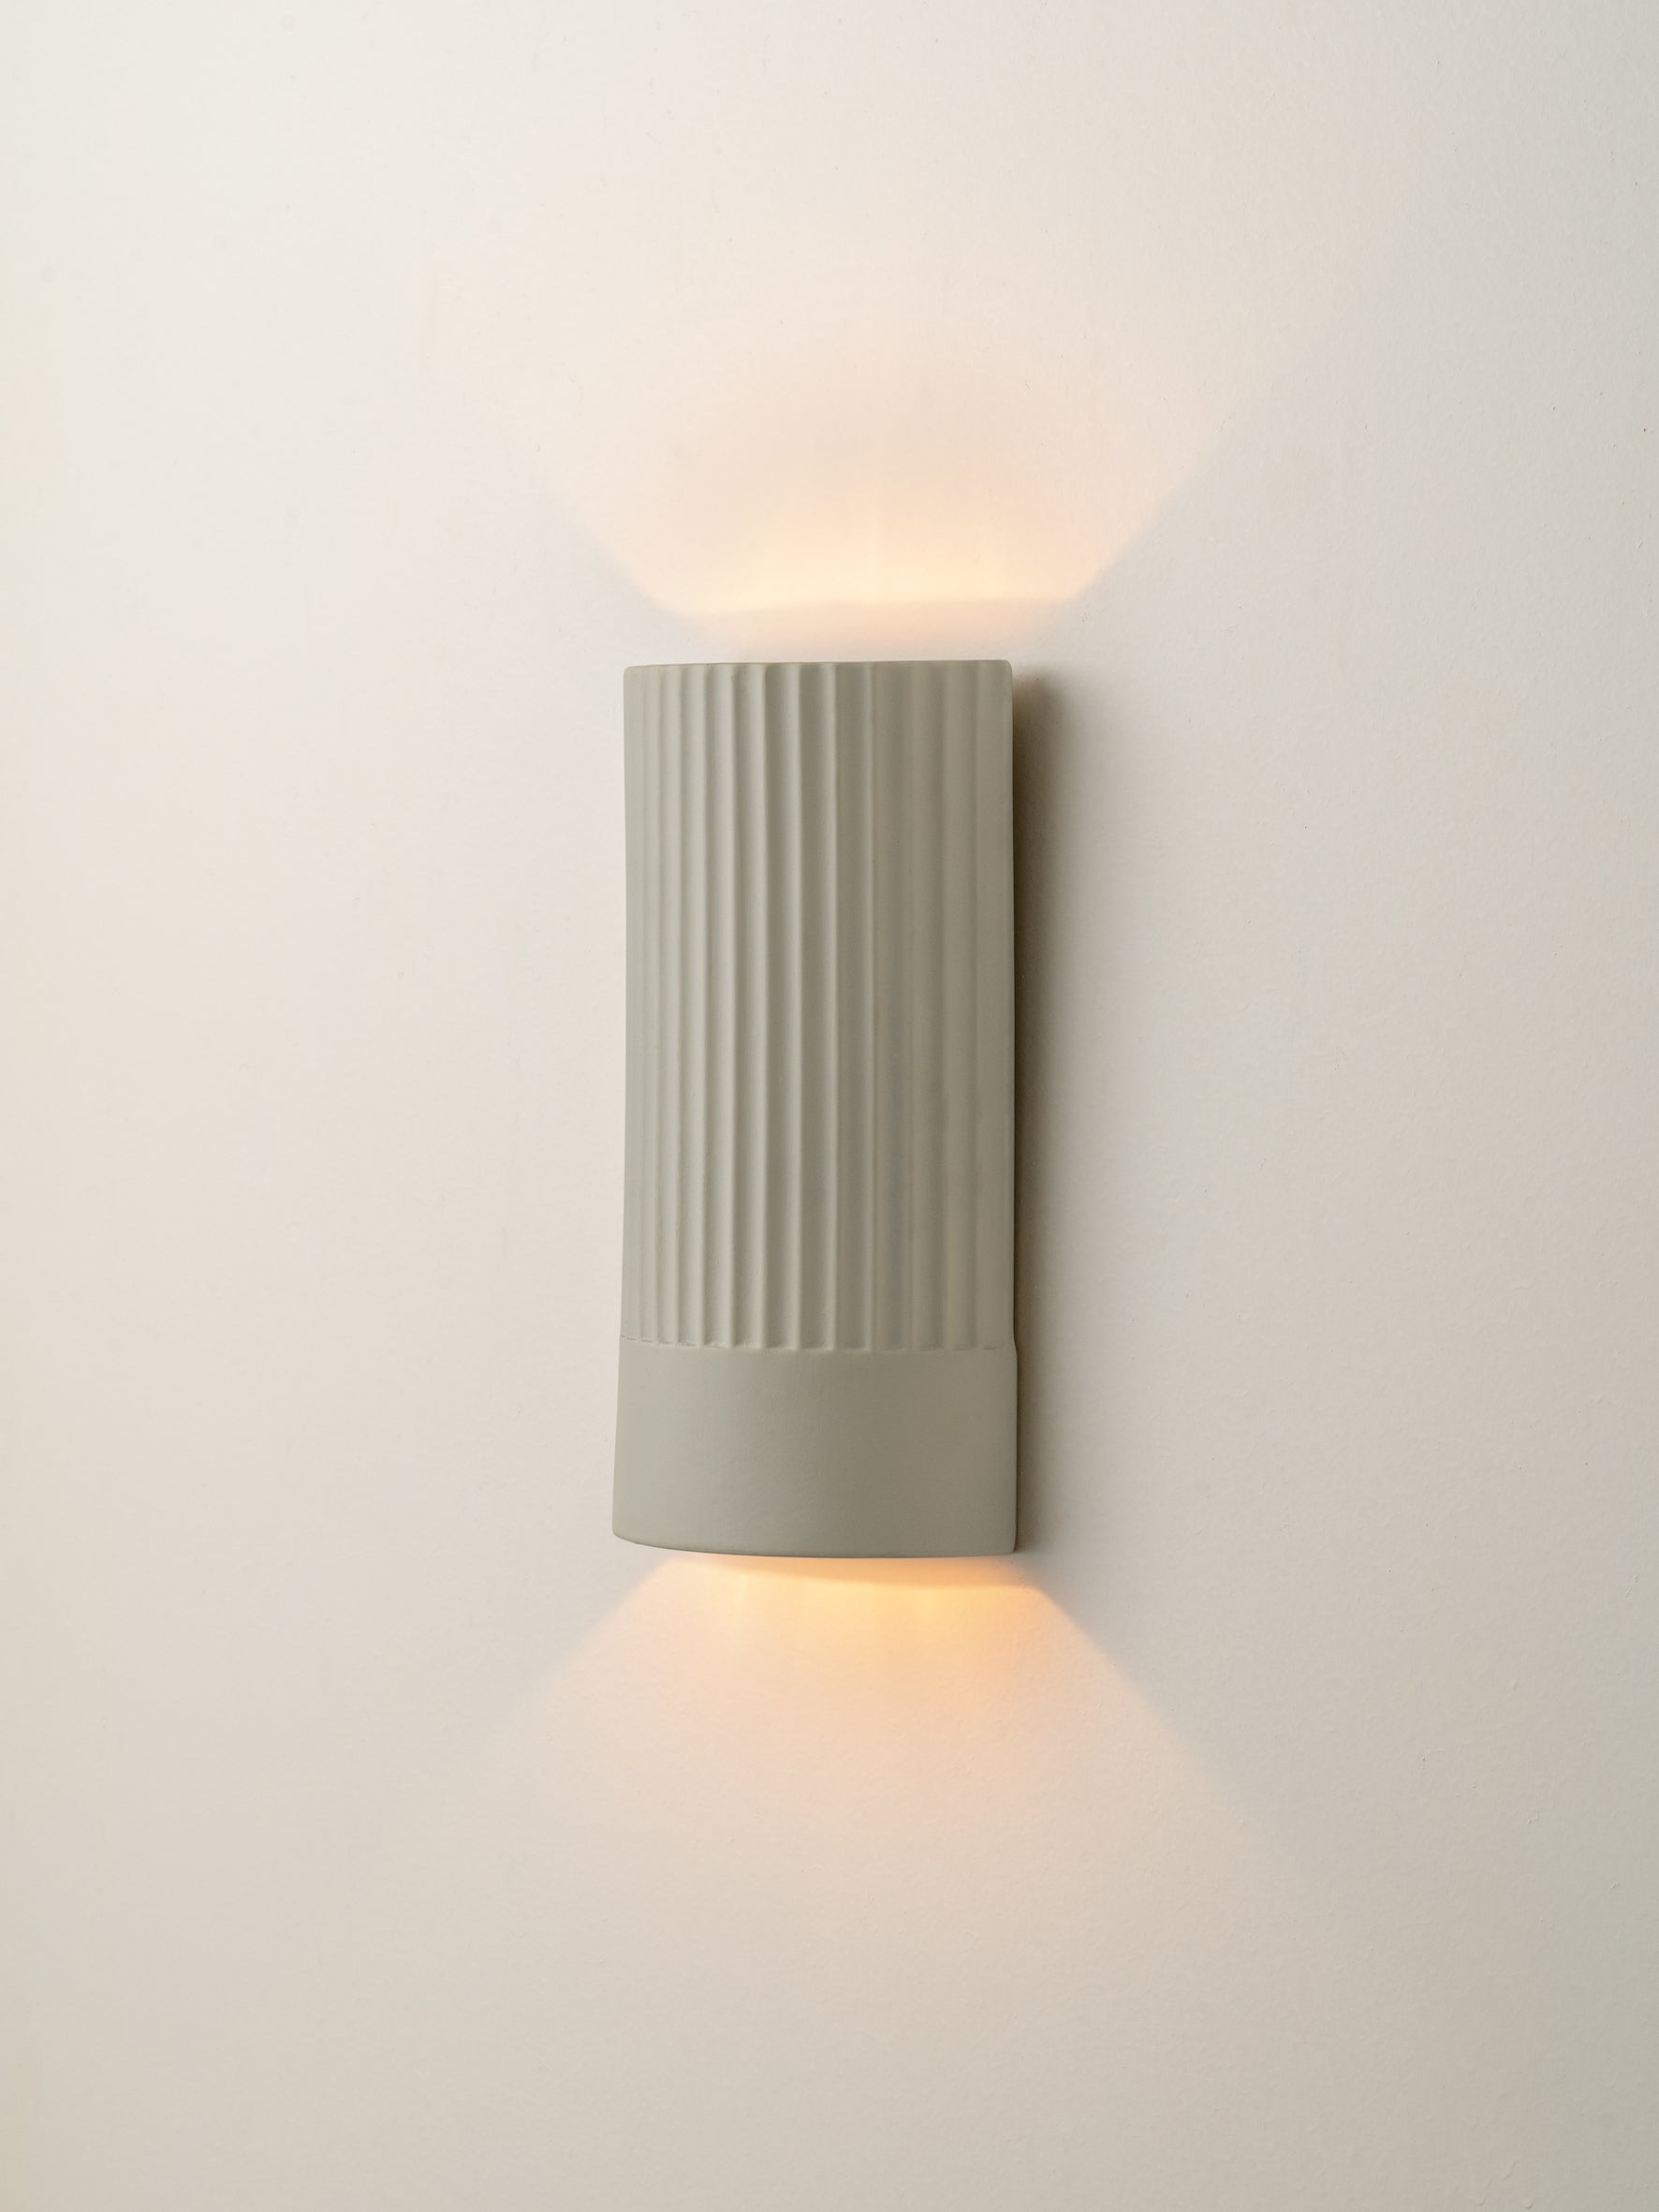 Enza - warm white ribbed concrete wall light | Wall Light | Lights & Lamps | US| Modern Affordable Designer Lighting